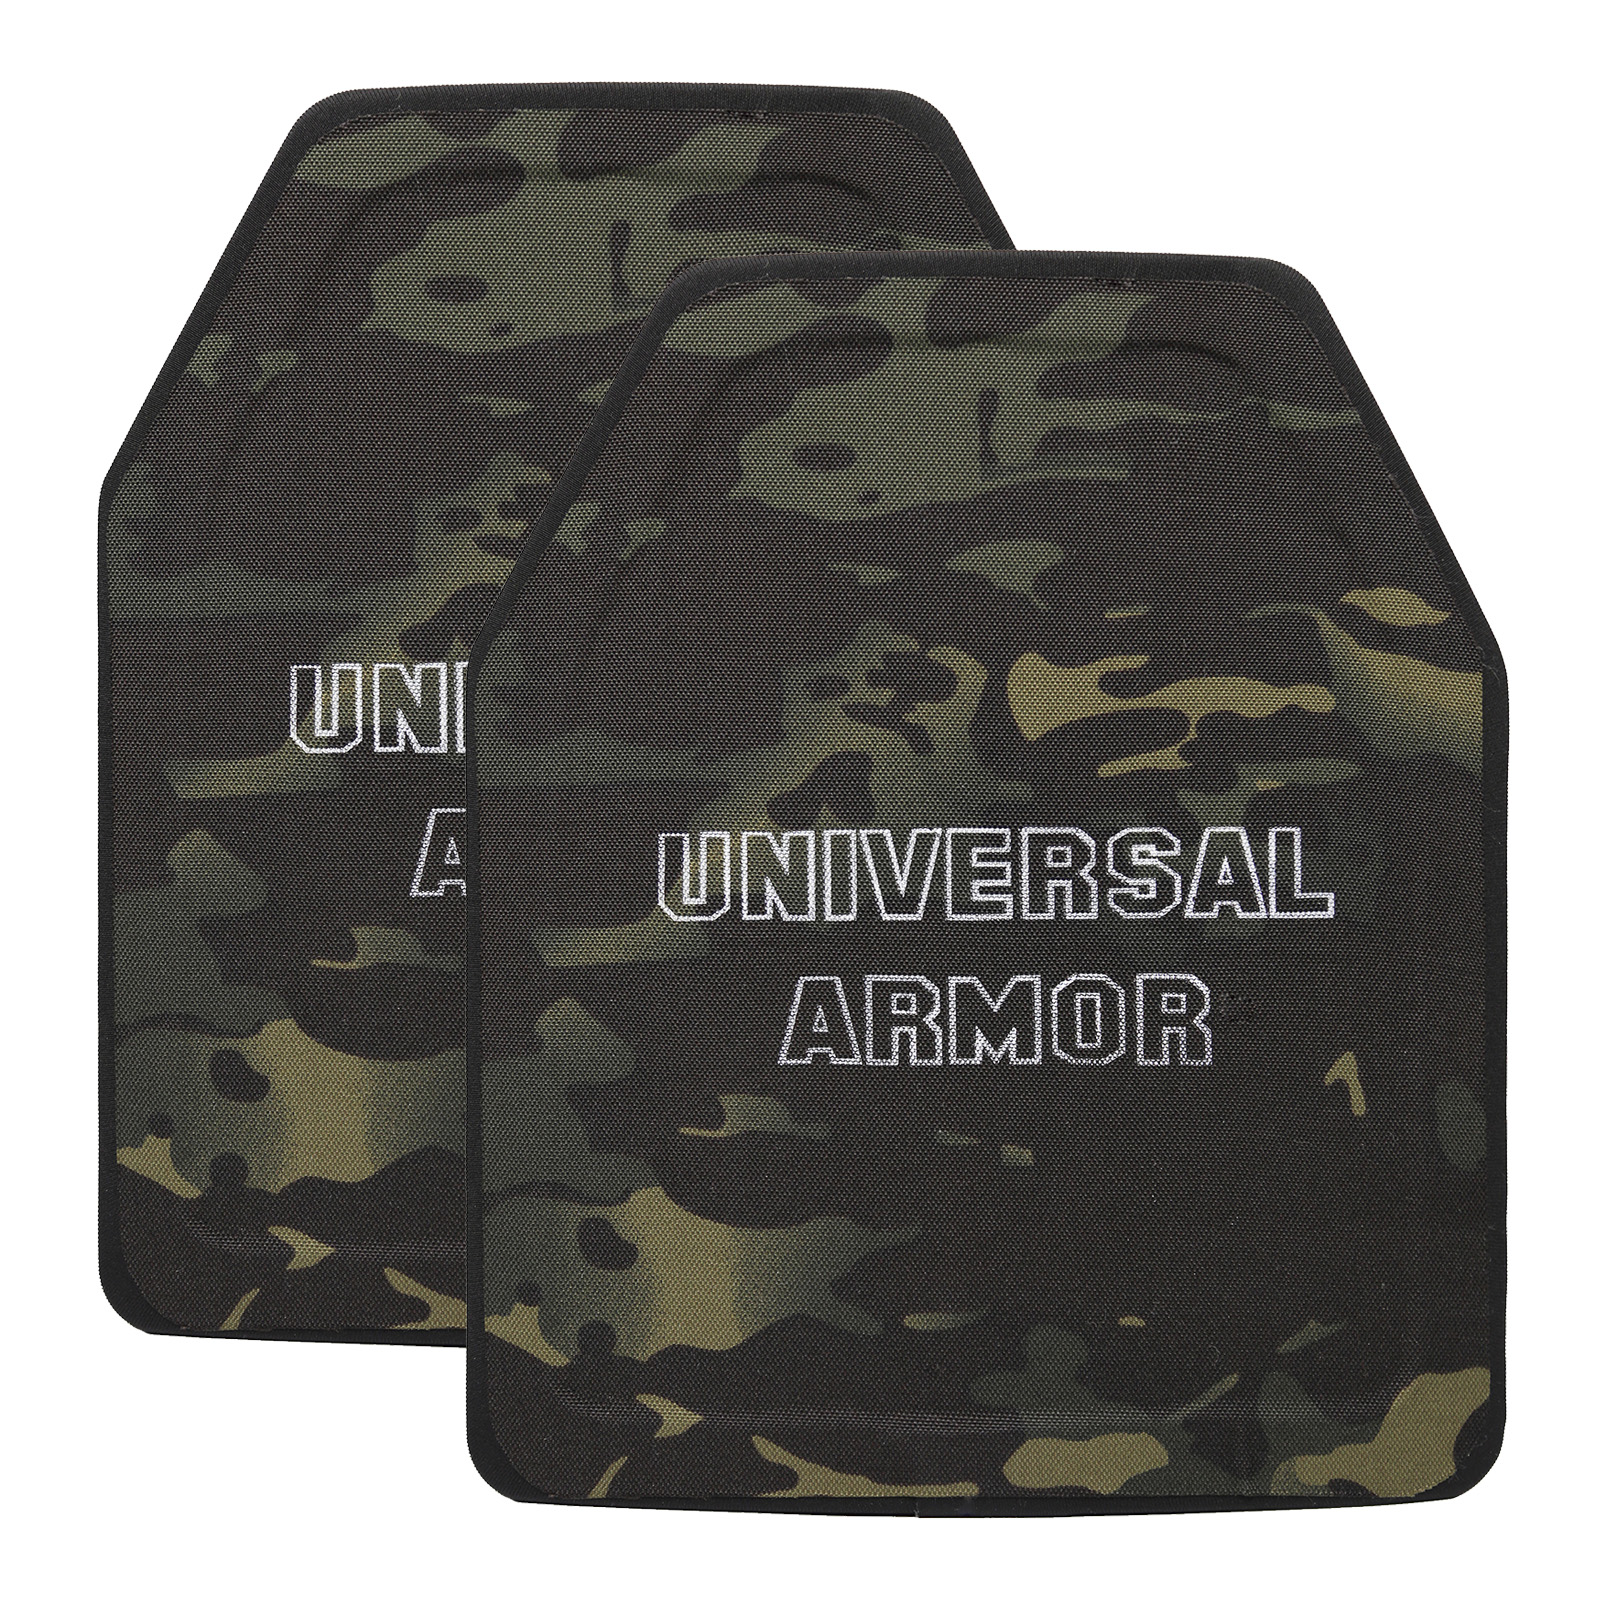 TacticalXmen UTA Level IV Lightweight Rifle Rated NIJ Certified Body Armor